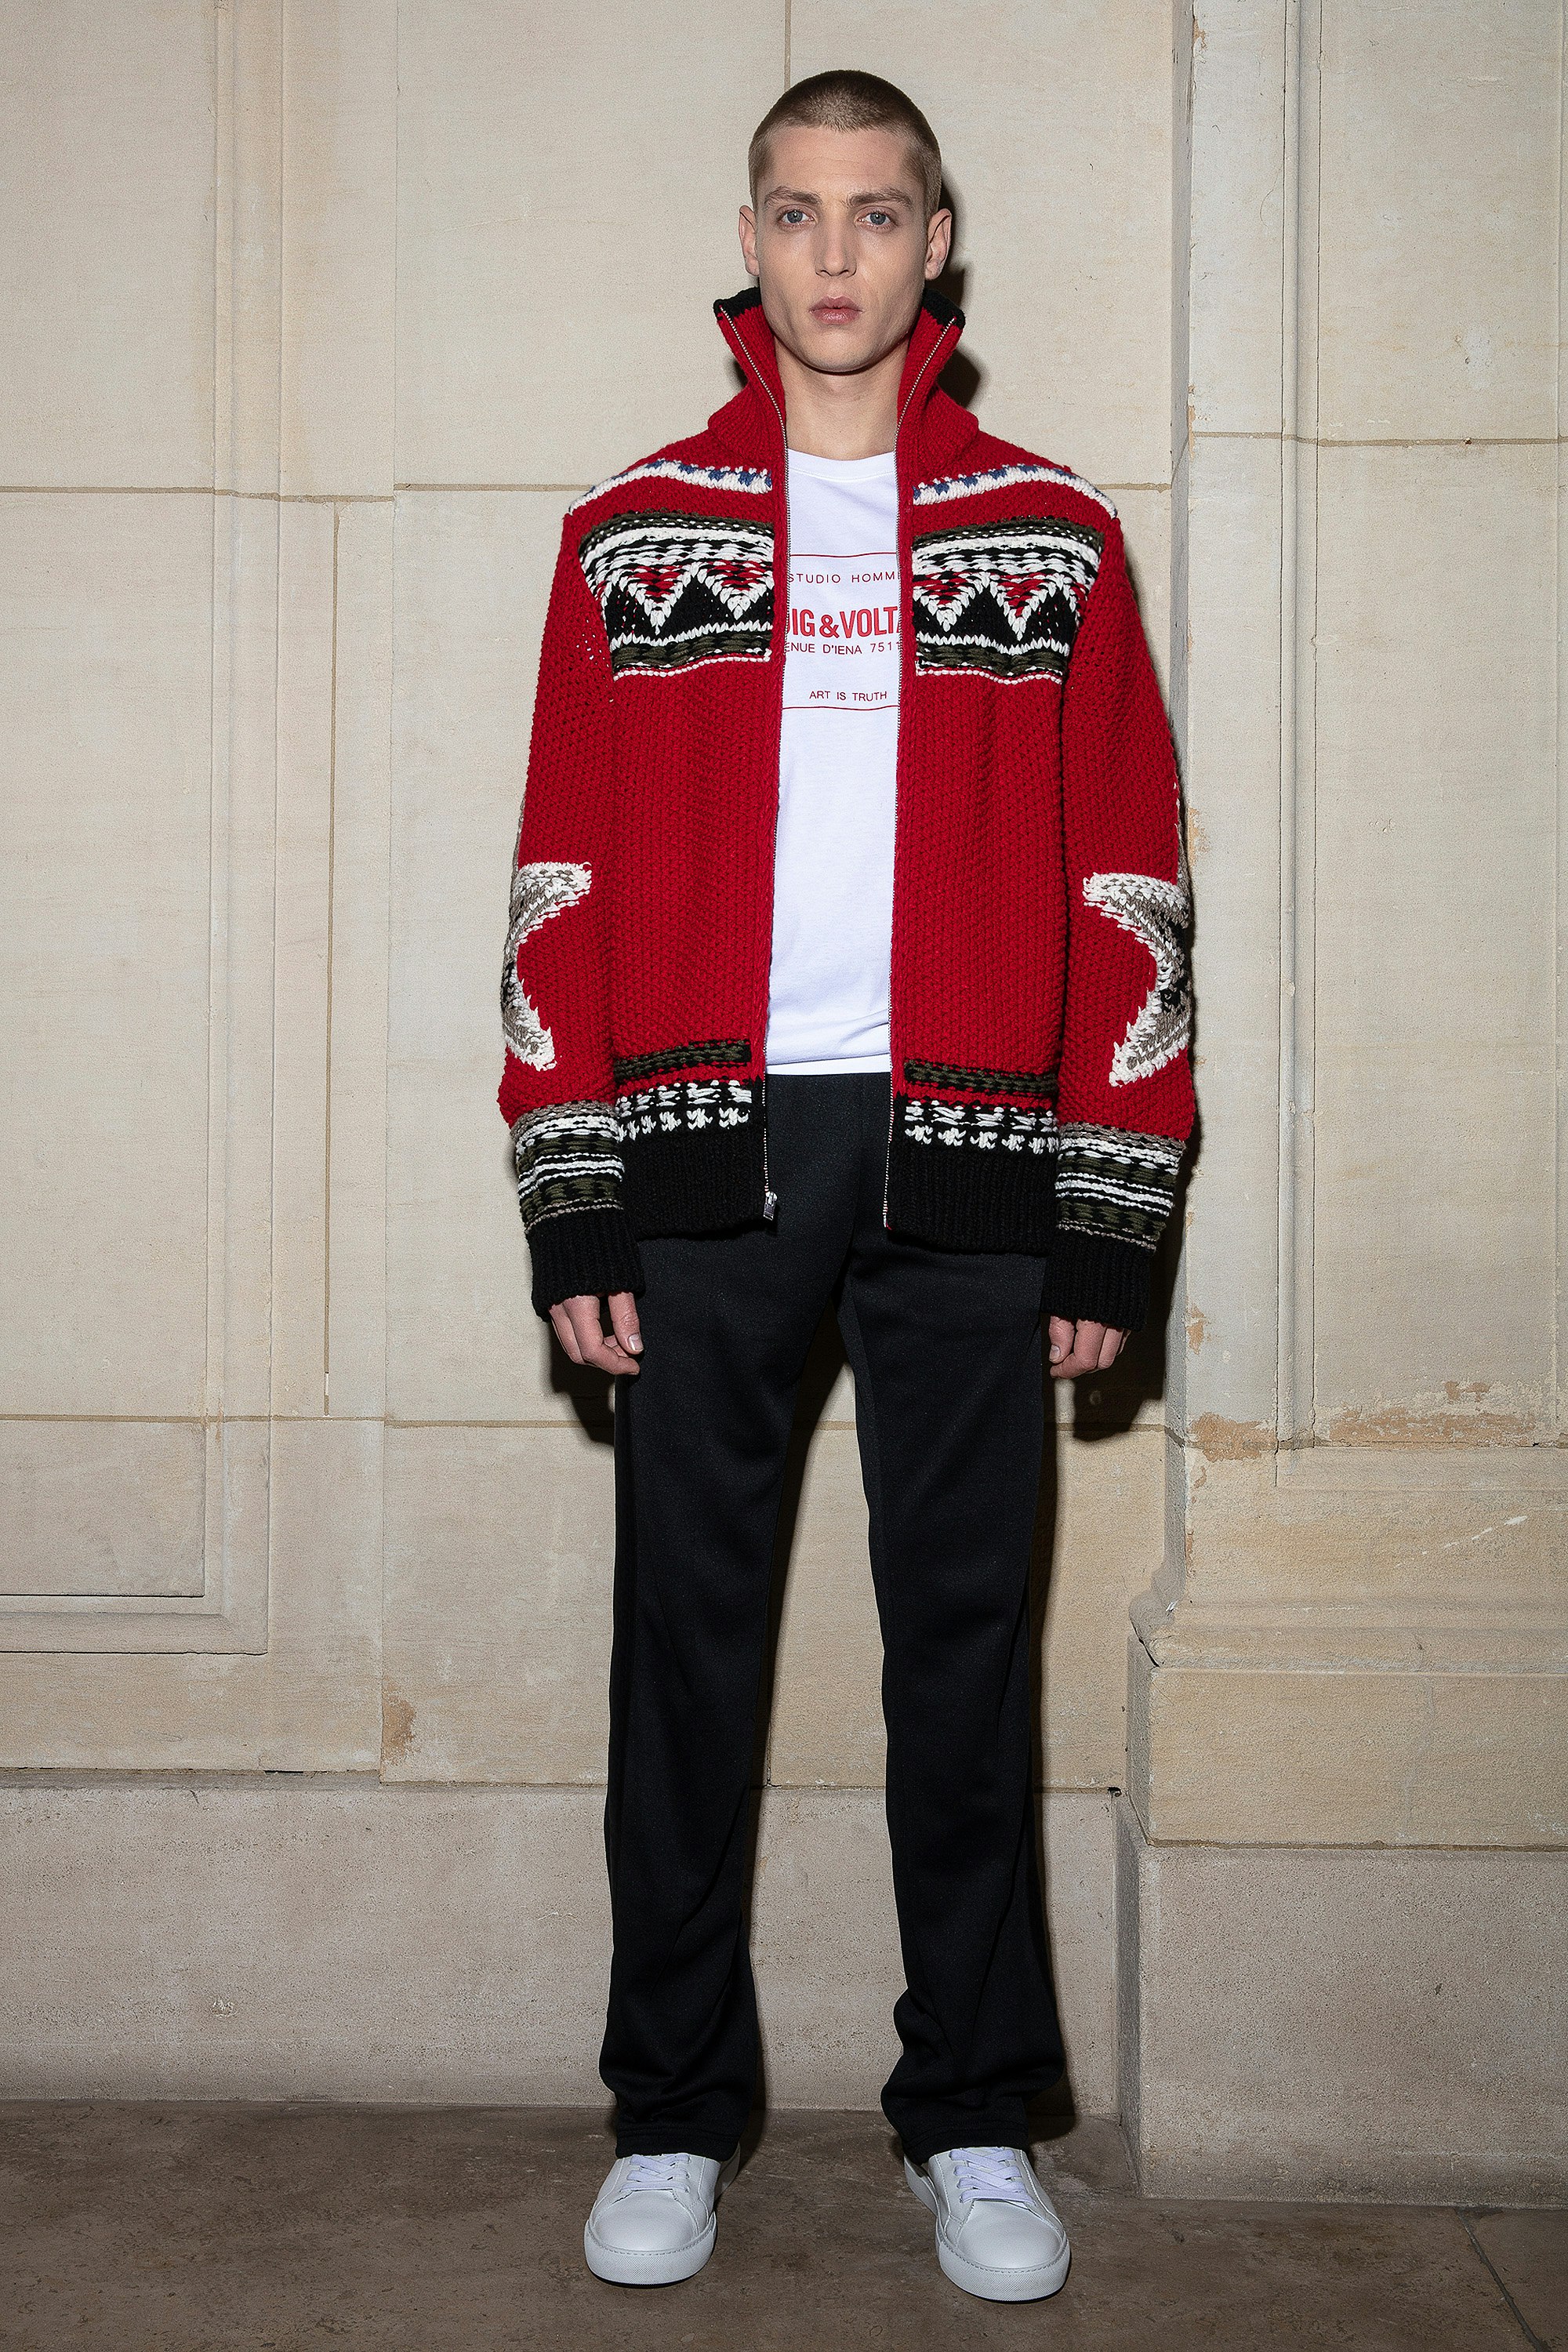 Christophe Cardigan Men's red wool cardigan with zipper